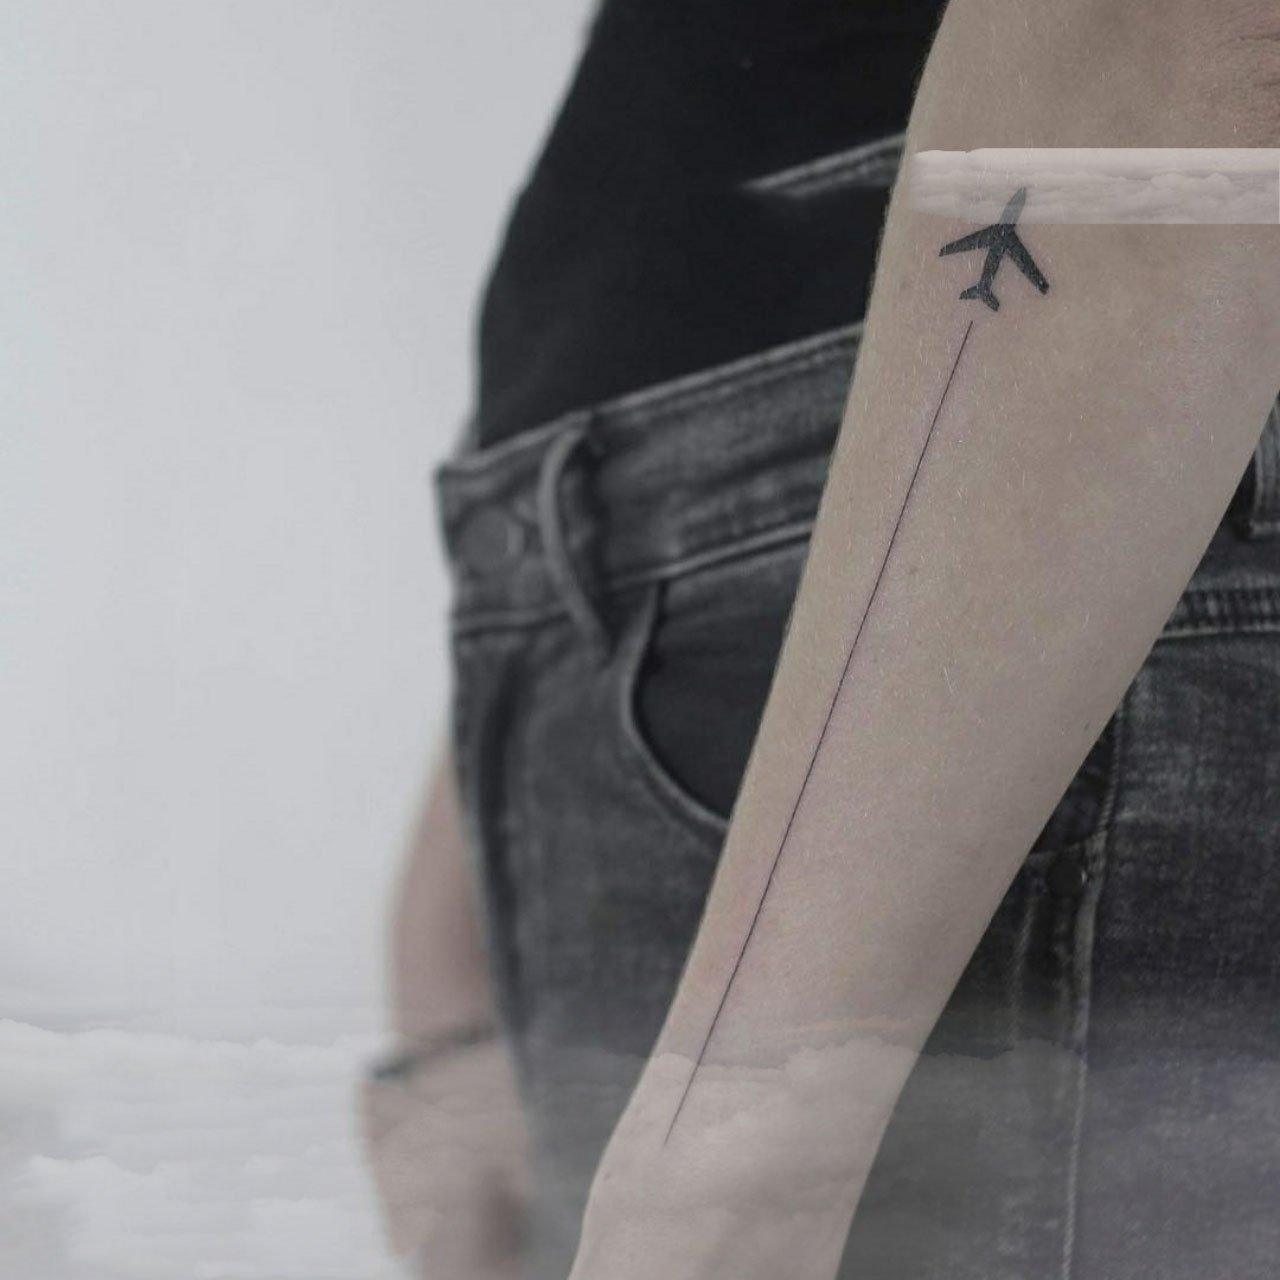 Straight-Line Aircraft Temporary Tattoo - StiCool